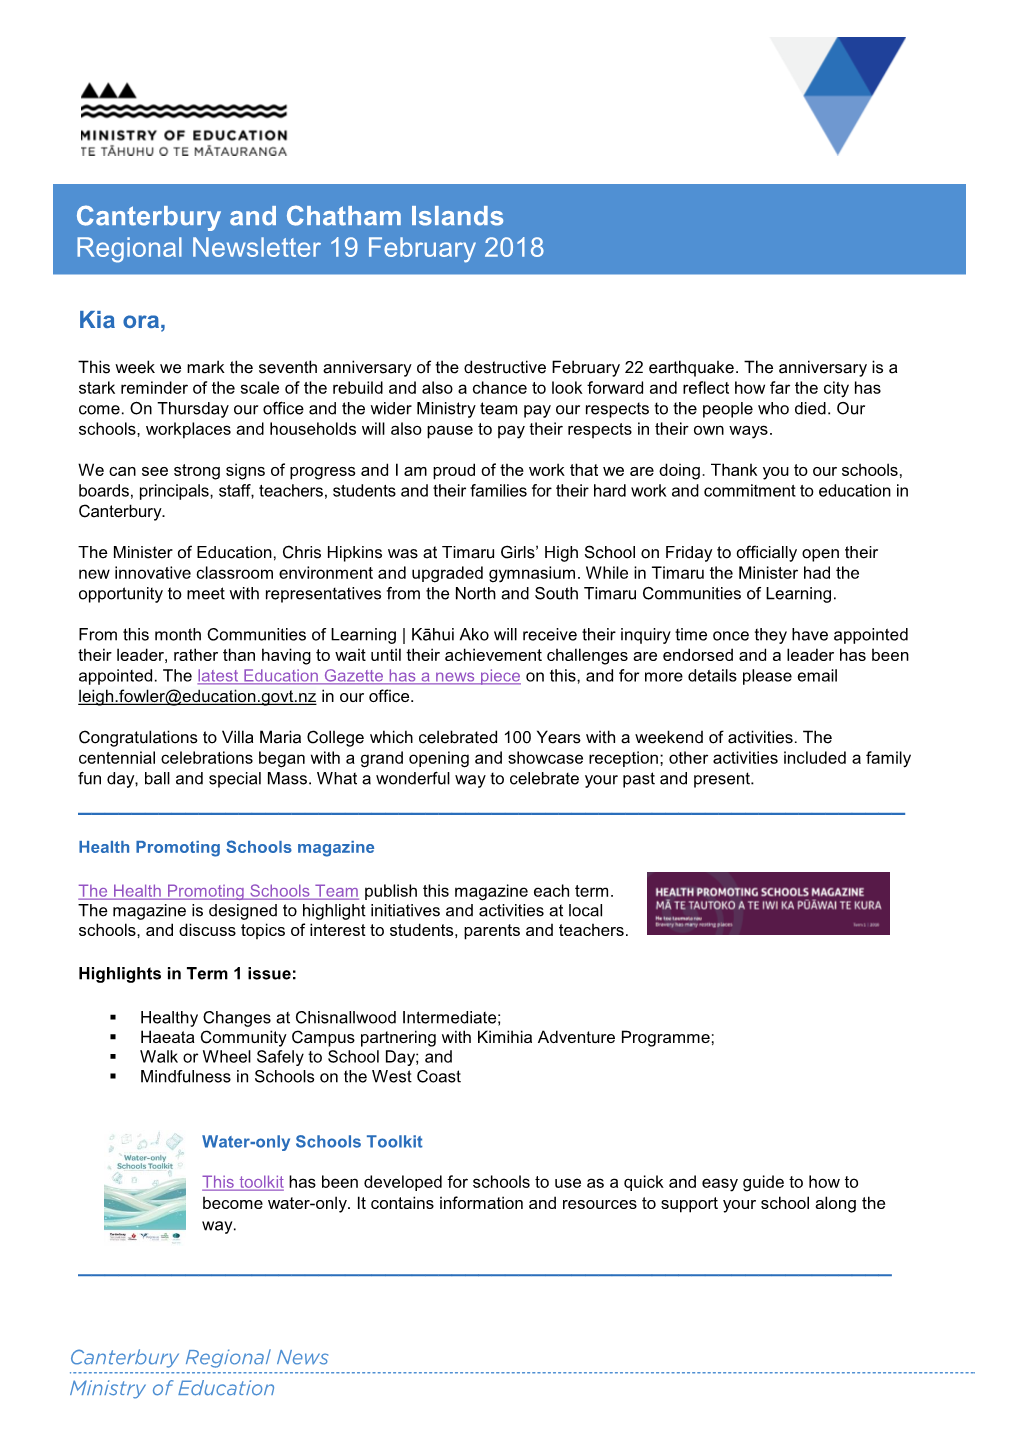 Canterbury Education Newsletter 19 February 2018